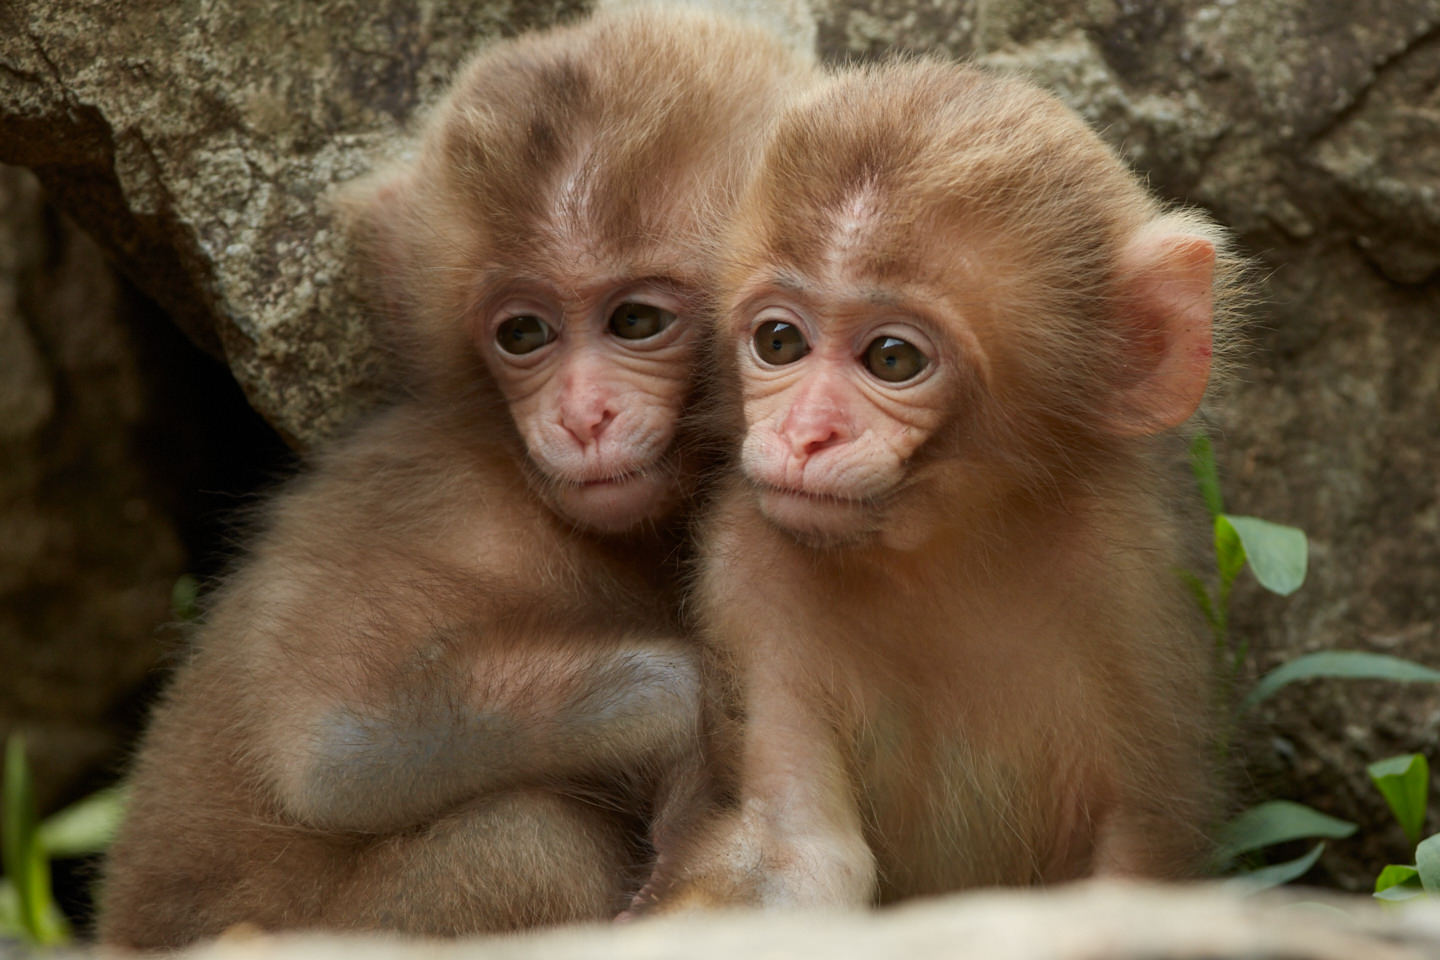 Two Baby Snow Monkeys